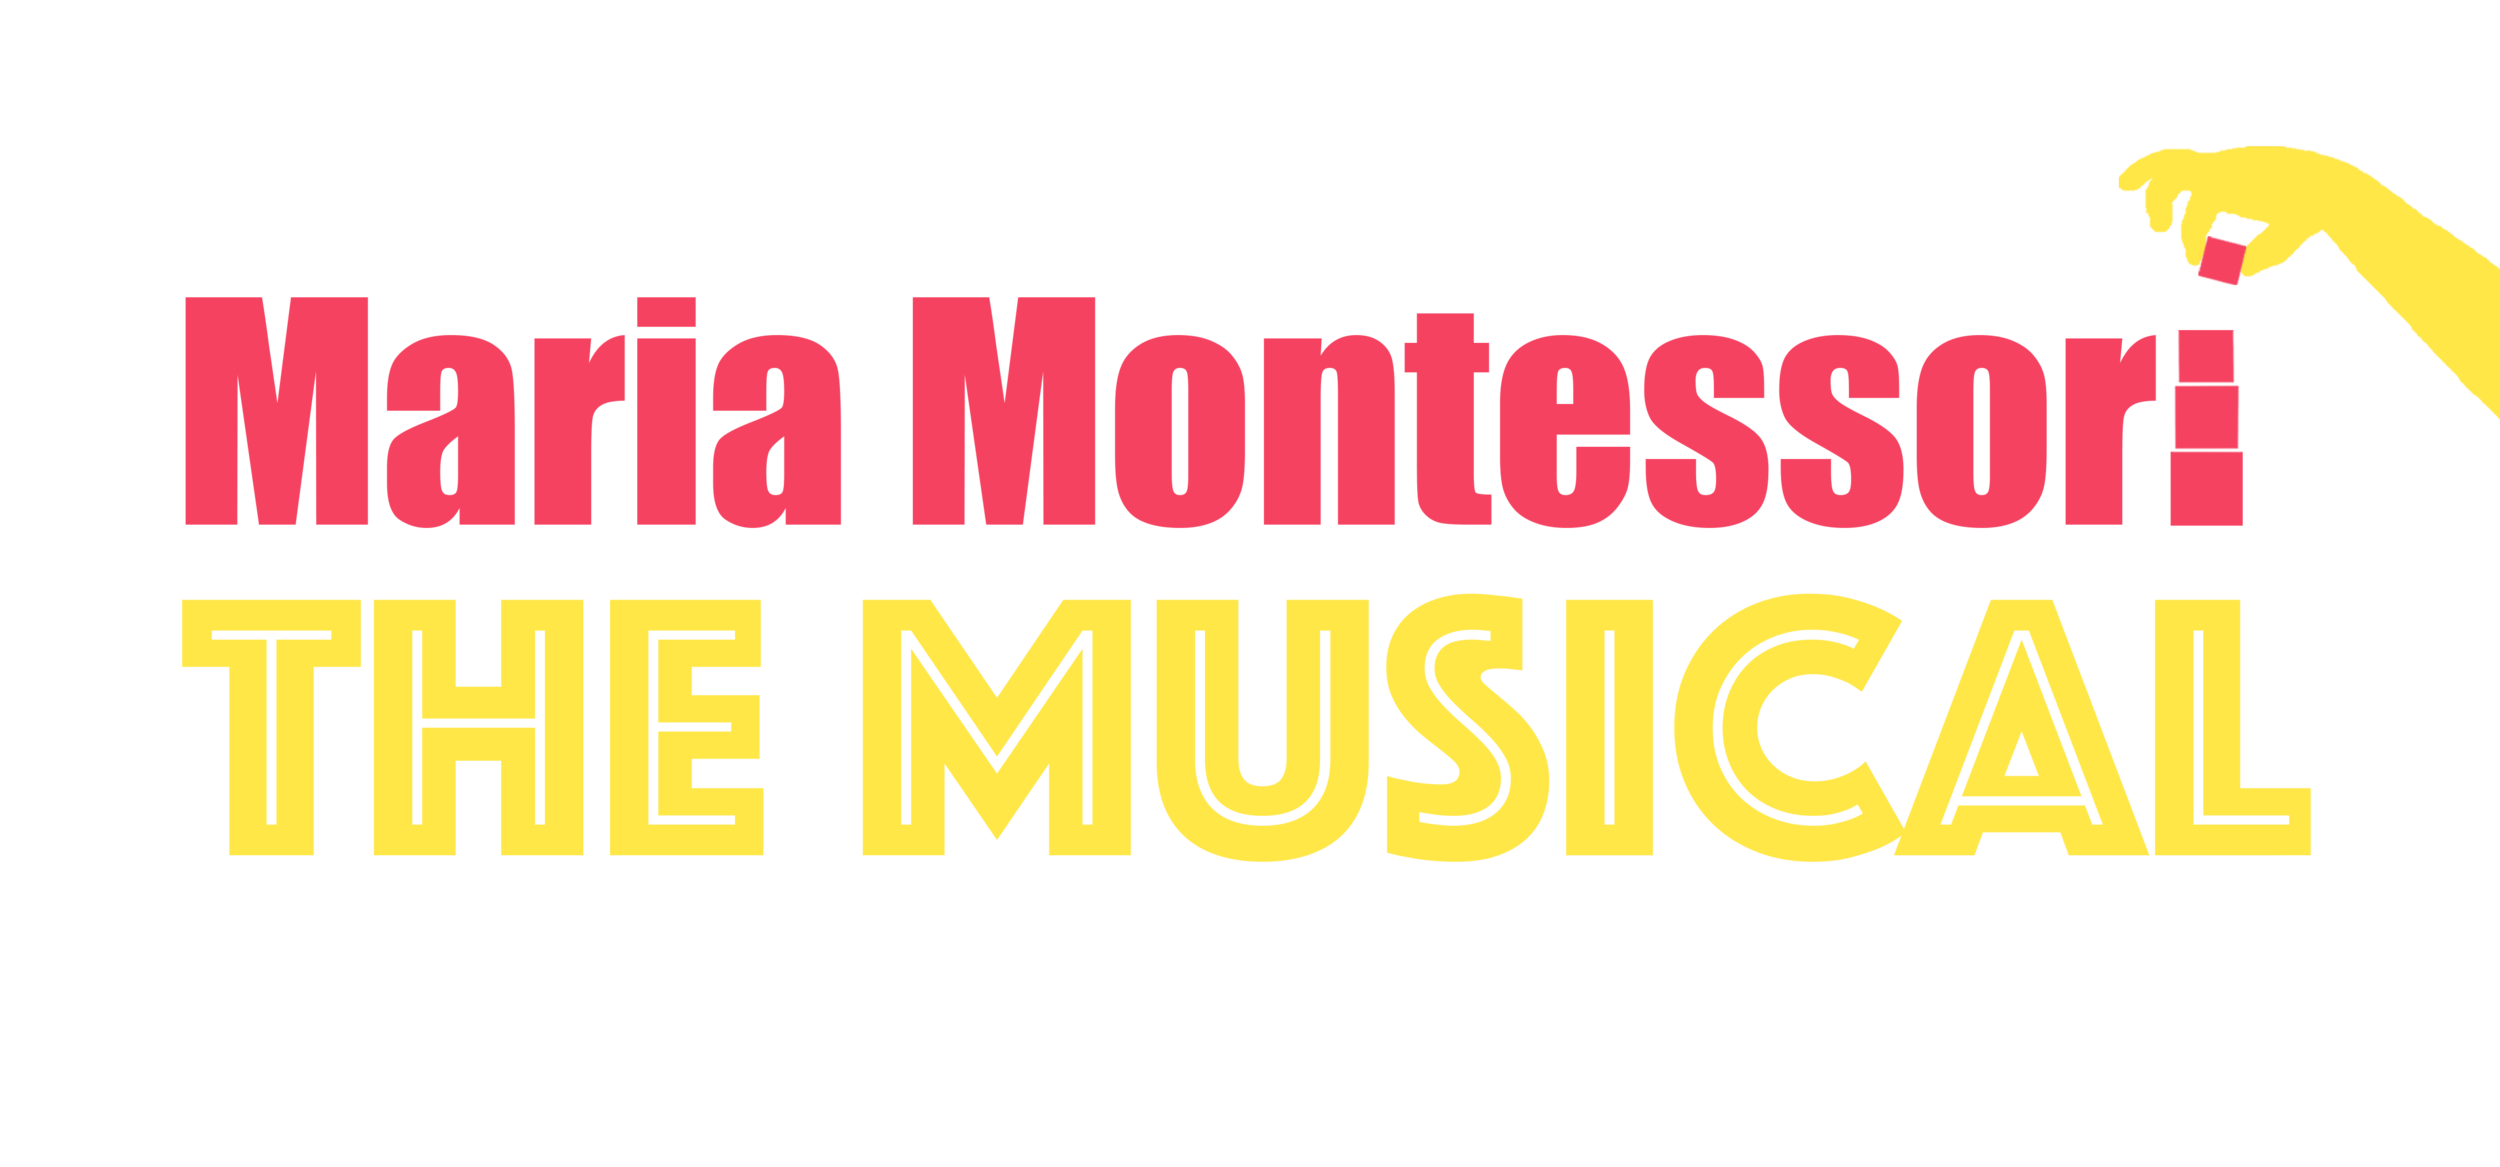 Maria Montessori: The Musical